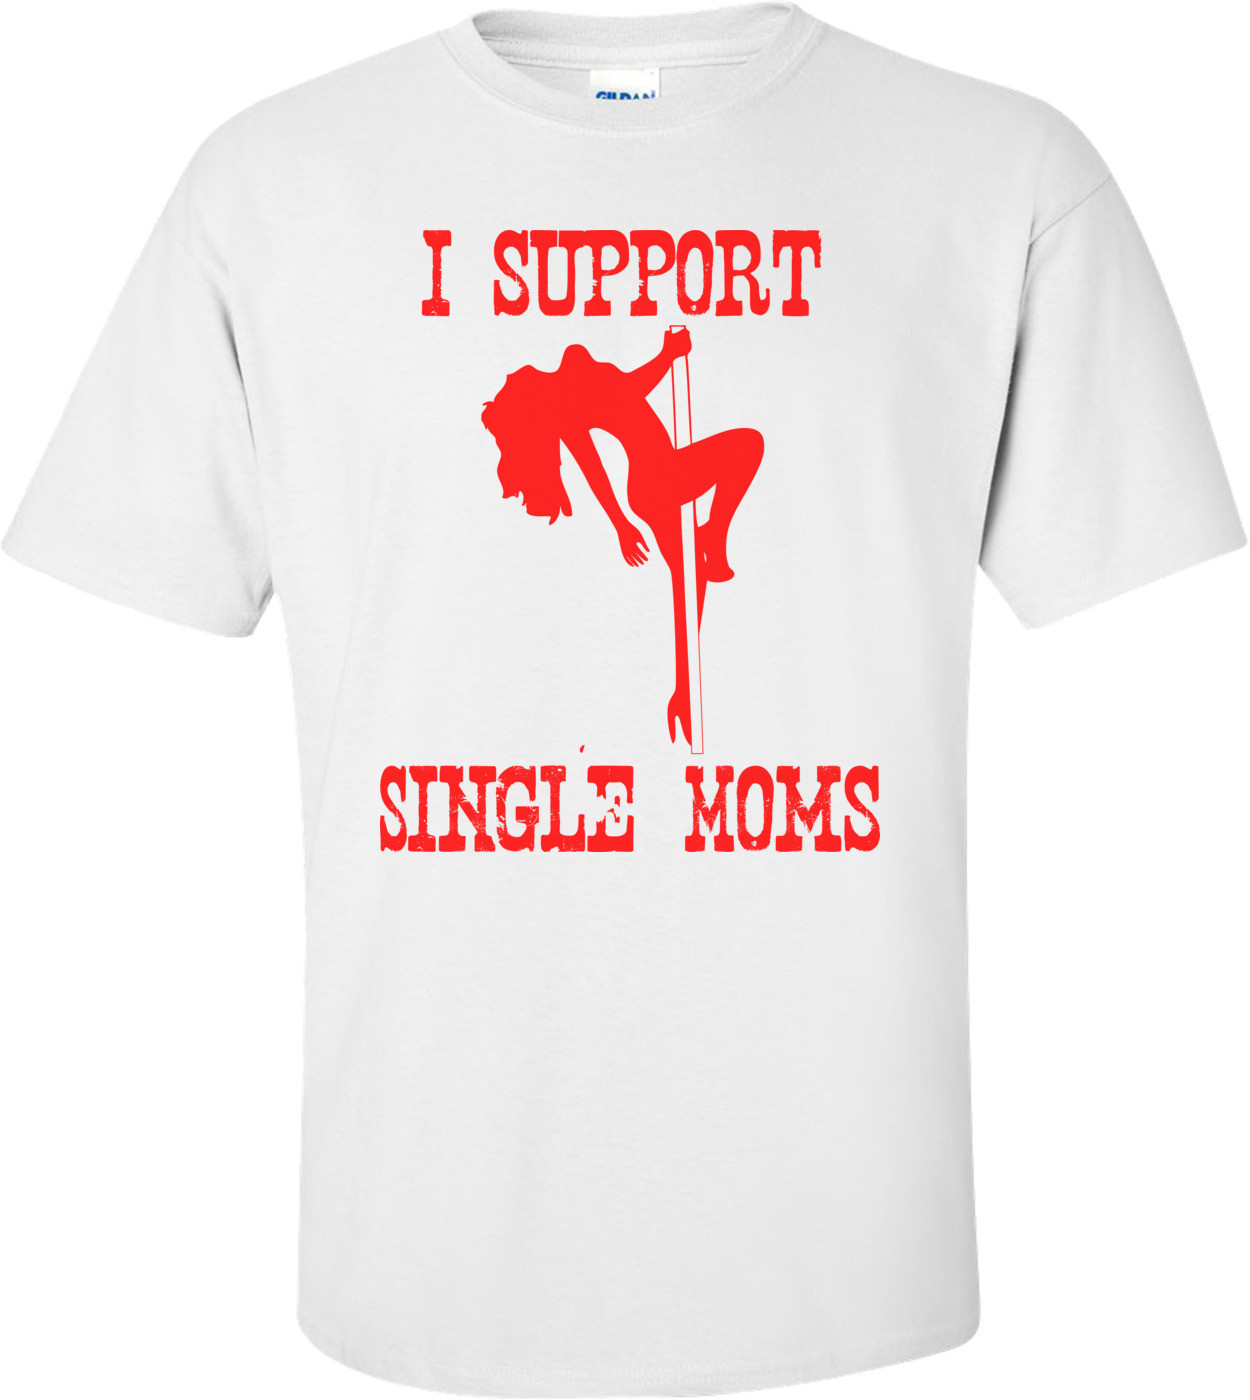 I Support Single Moms T-shirt